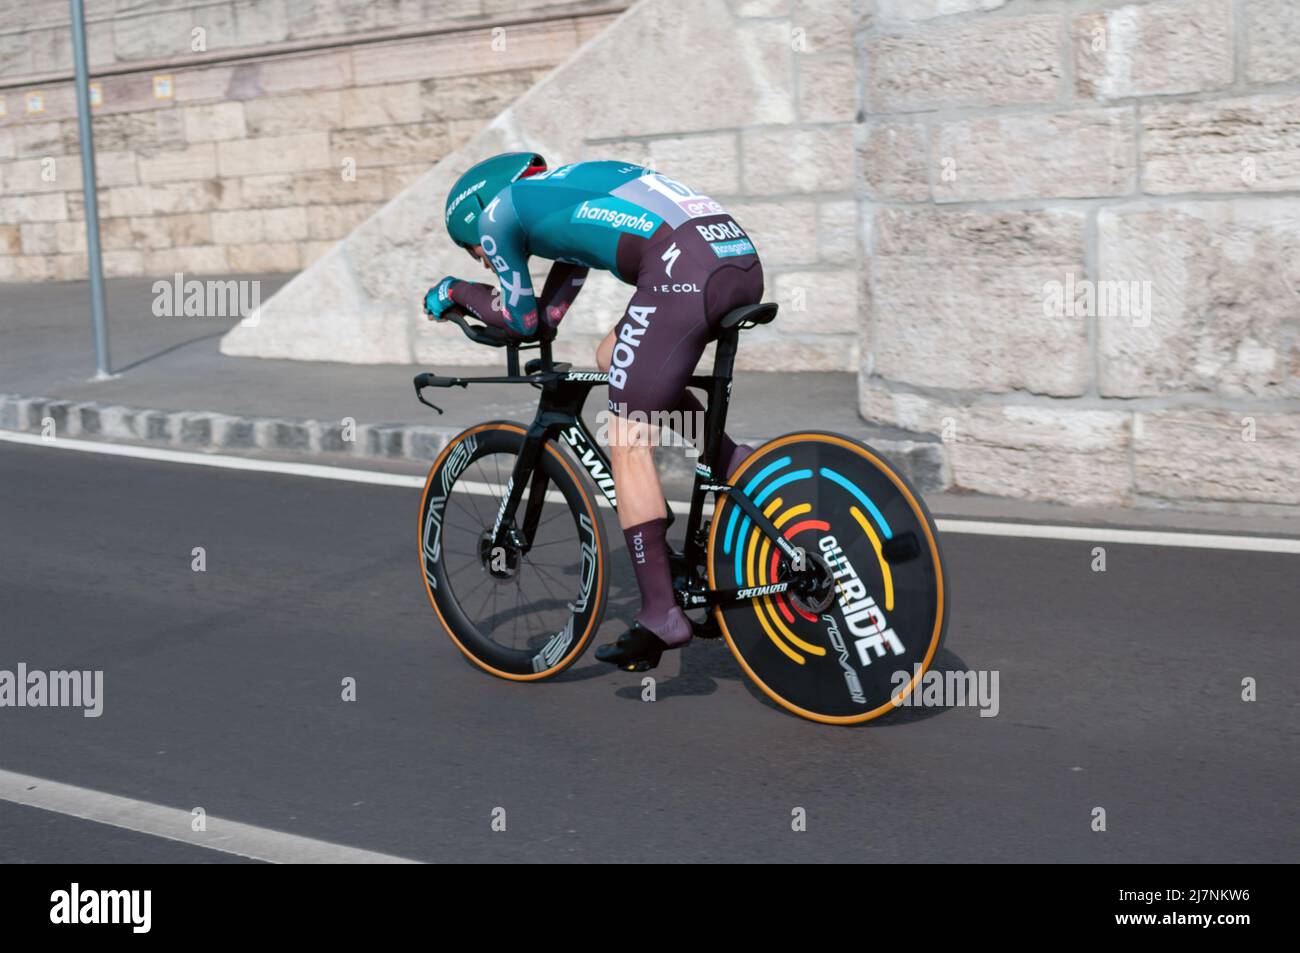 BUDAPEST, UNGARN - 07. MAI 2022: Profi-Radfahrer Giovanni Aleotti BORA - HANSGROHE Giro D'Italia Etappe 2 Zeitfahren - Radrennen am 07. Mai 2022 Stockfoto